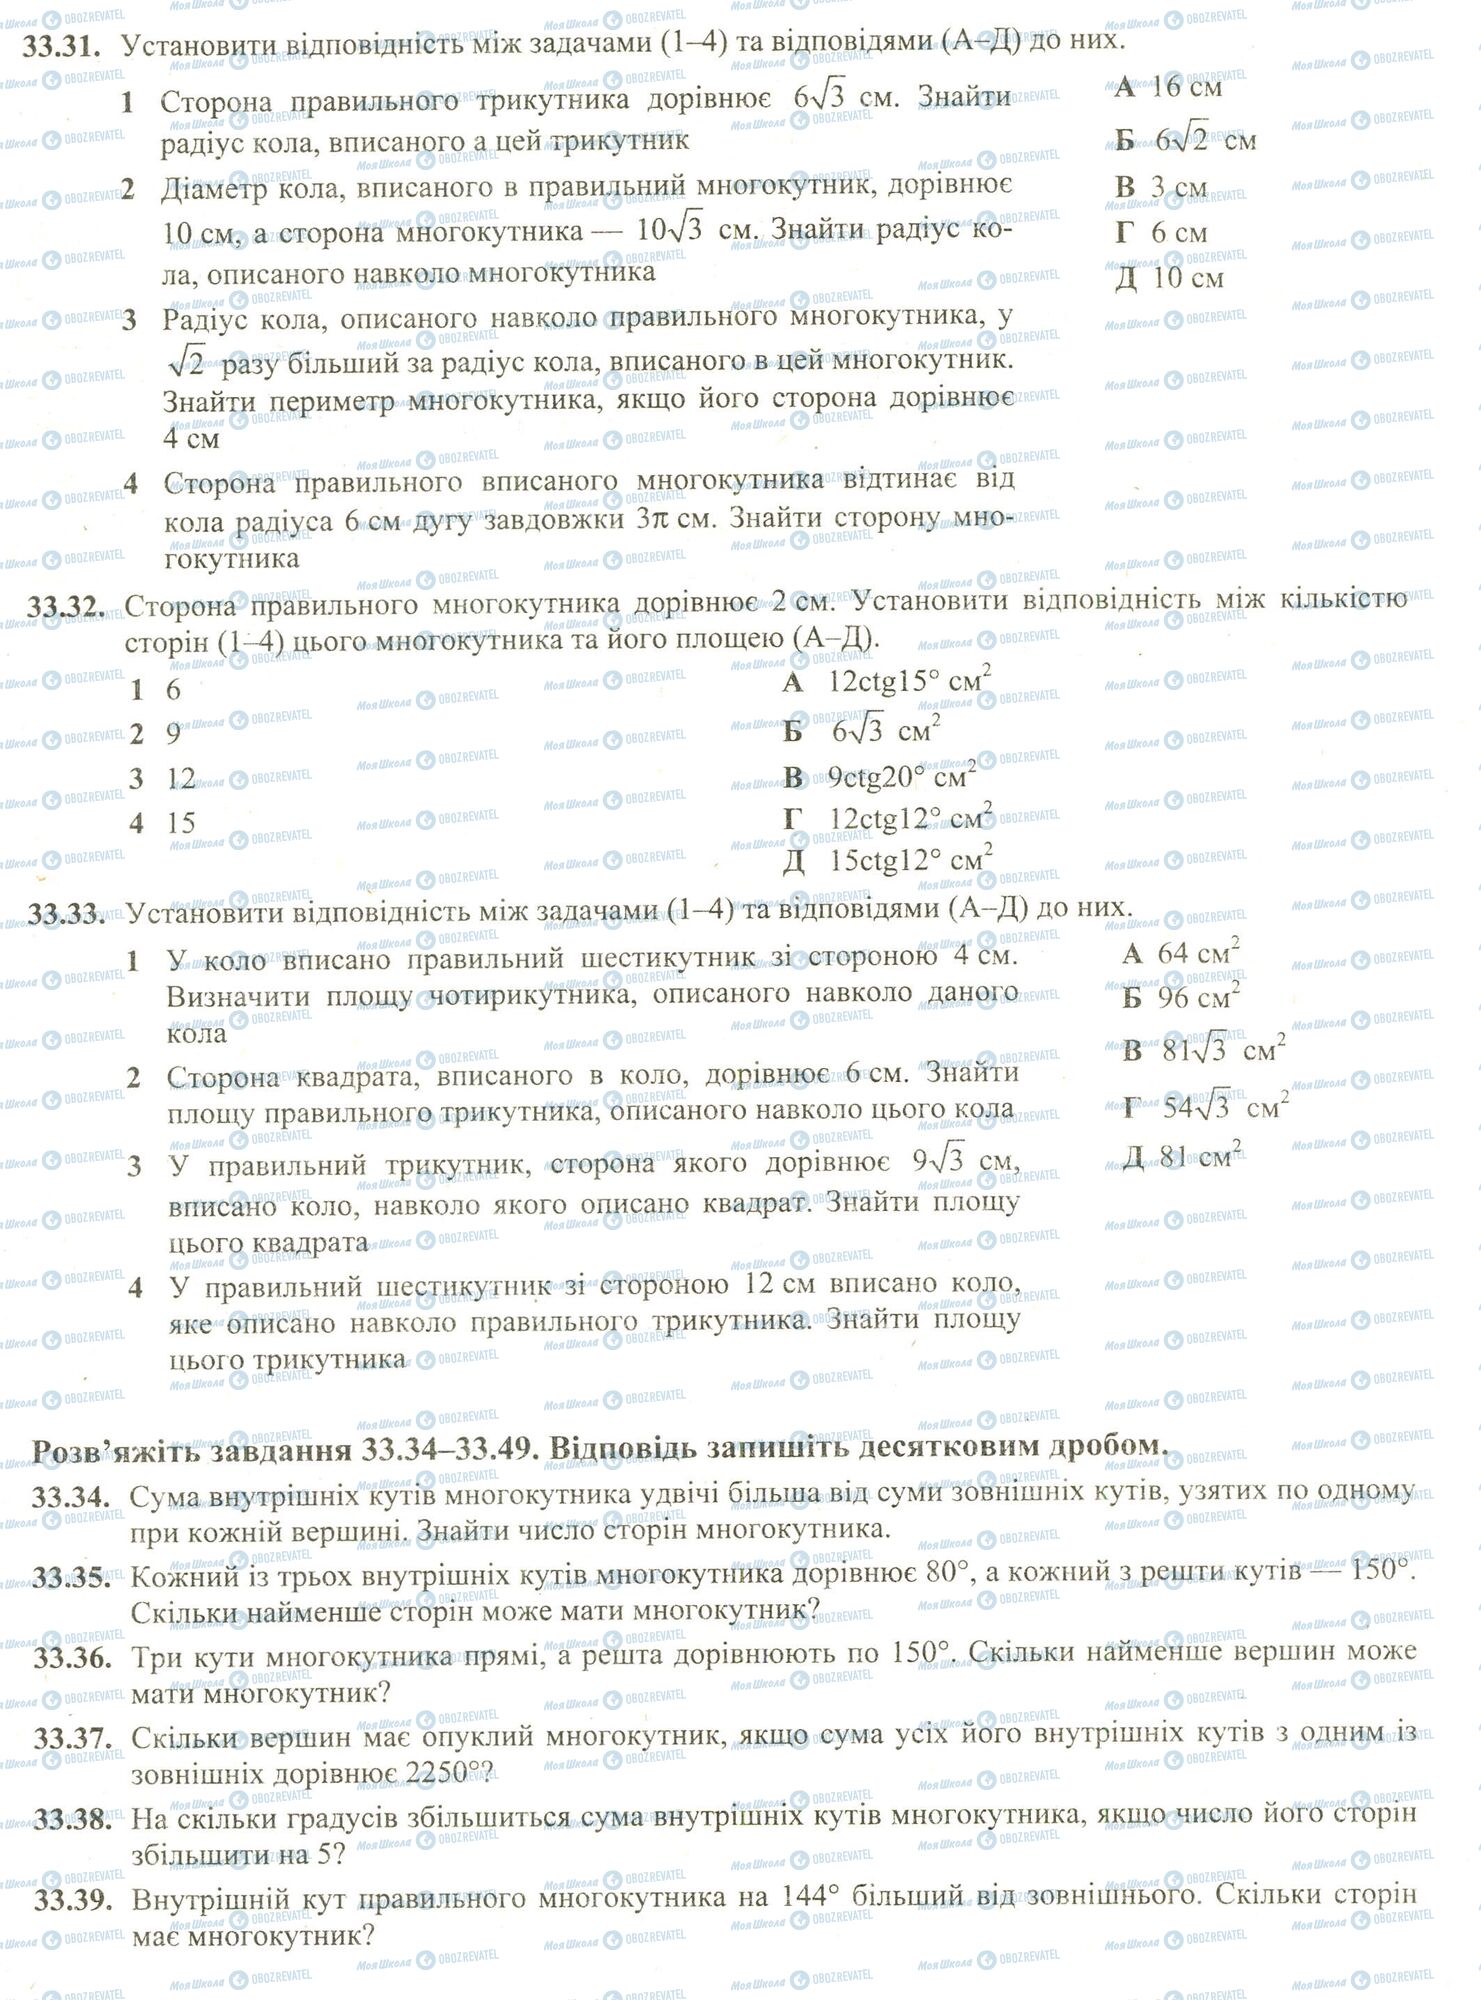 ЗНО Математика 11 класс страница 31-39